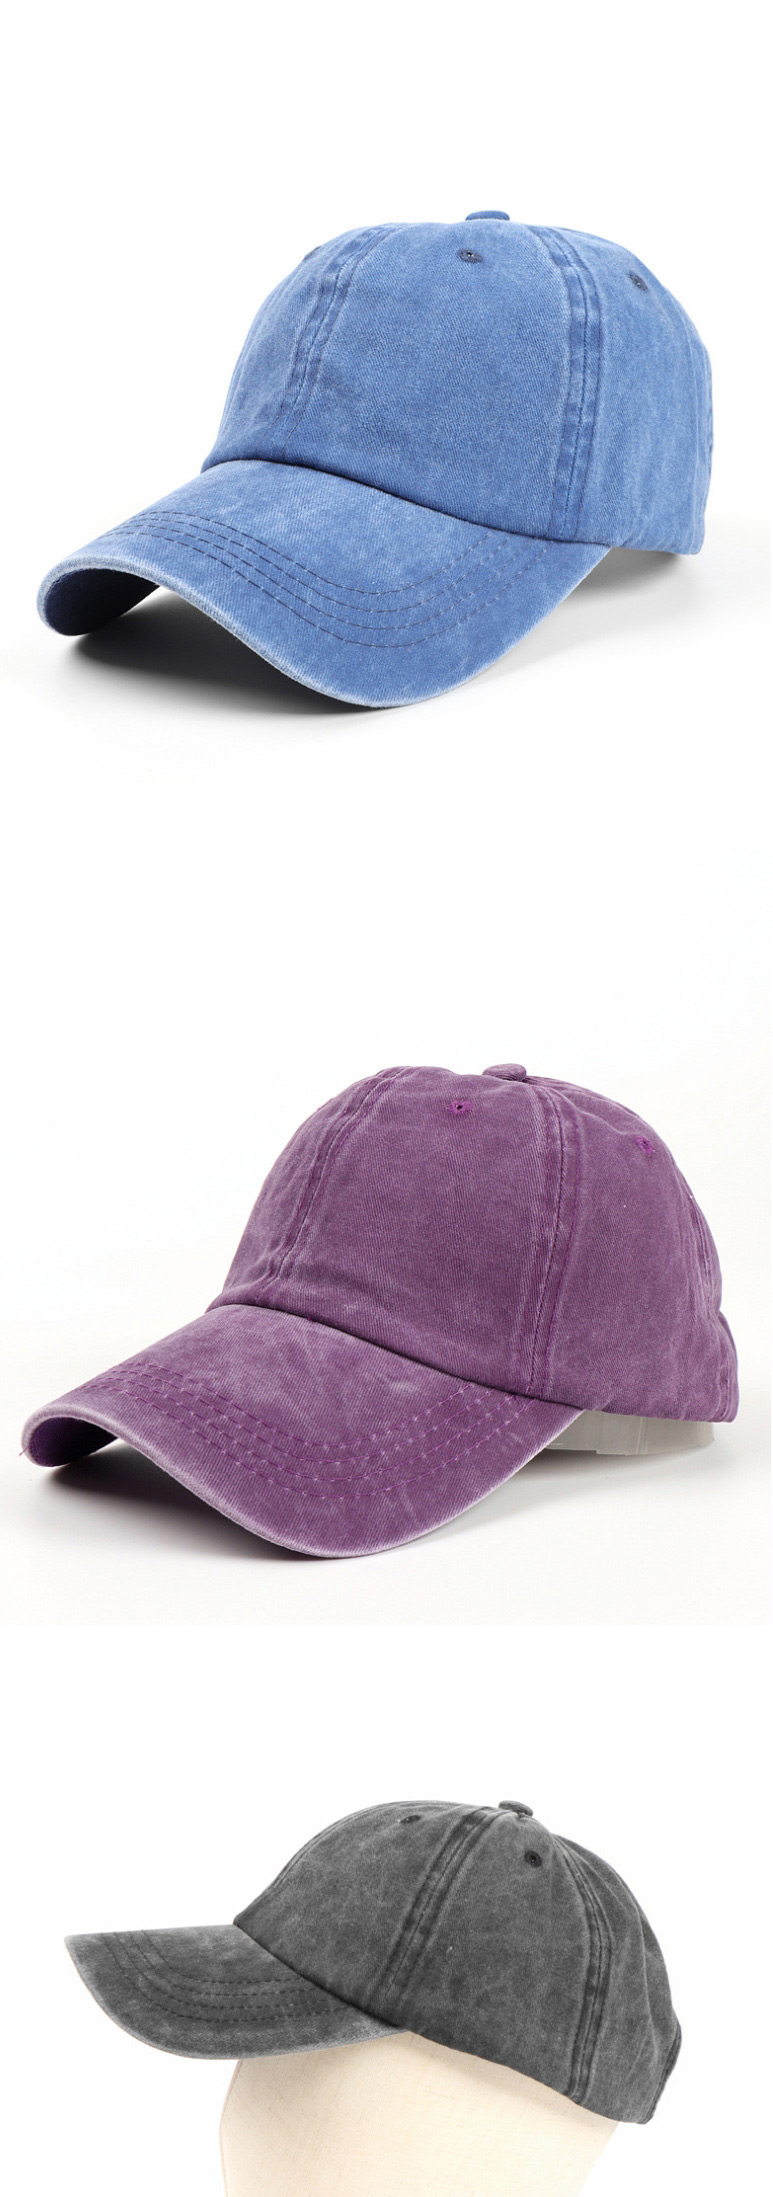 Fashion Purple Washed Distressed Denim Soft Top Curved Brim Cap,Baseball Caps